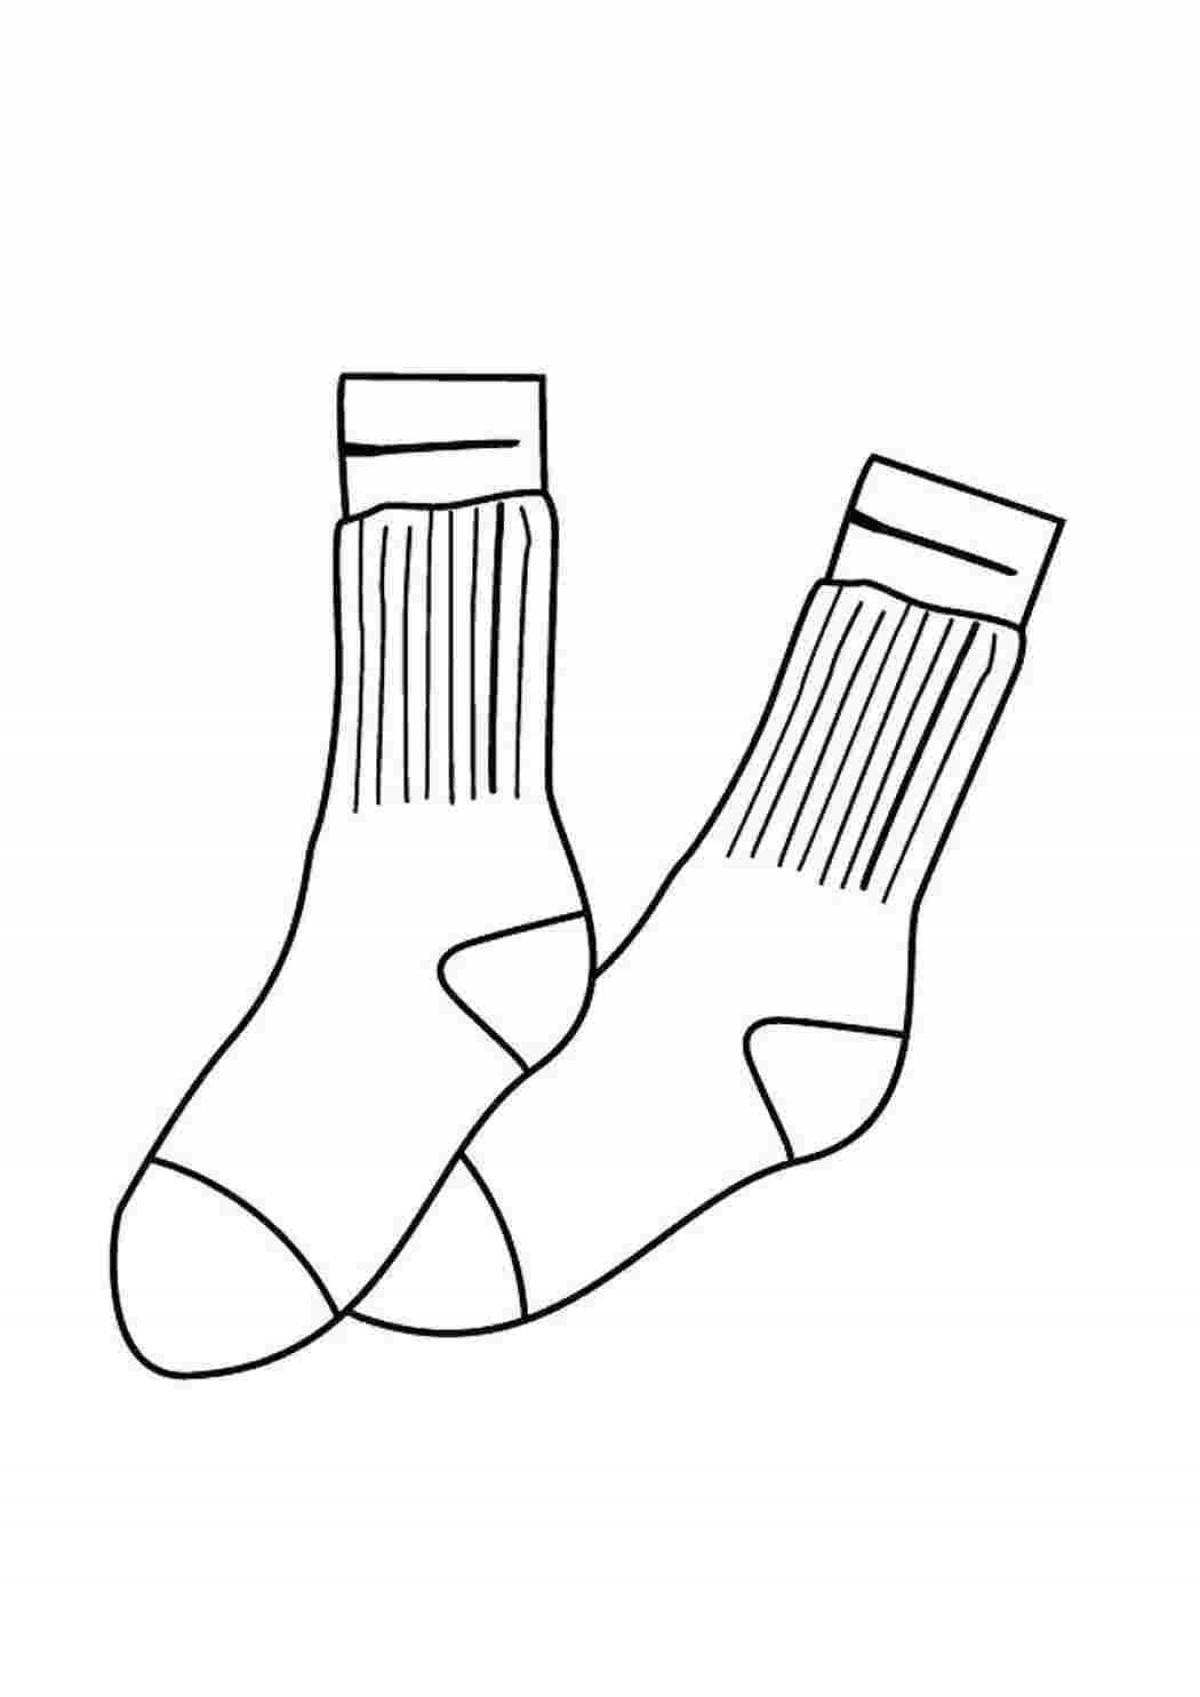 Socks #1